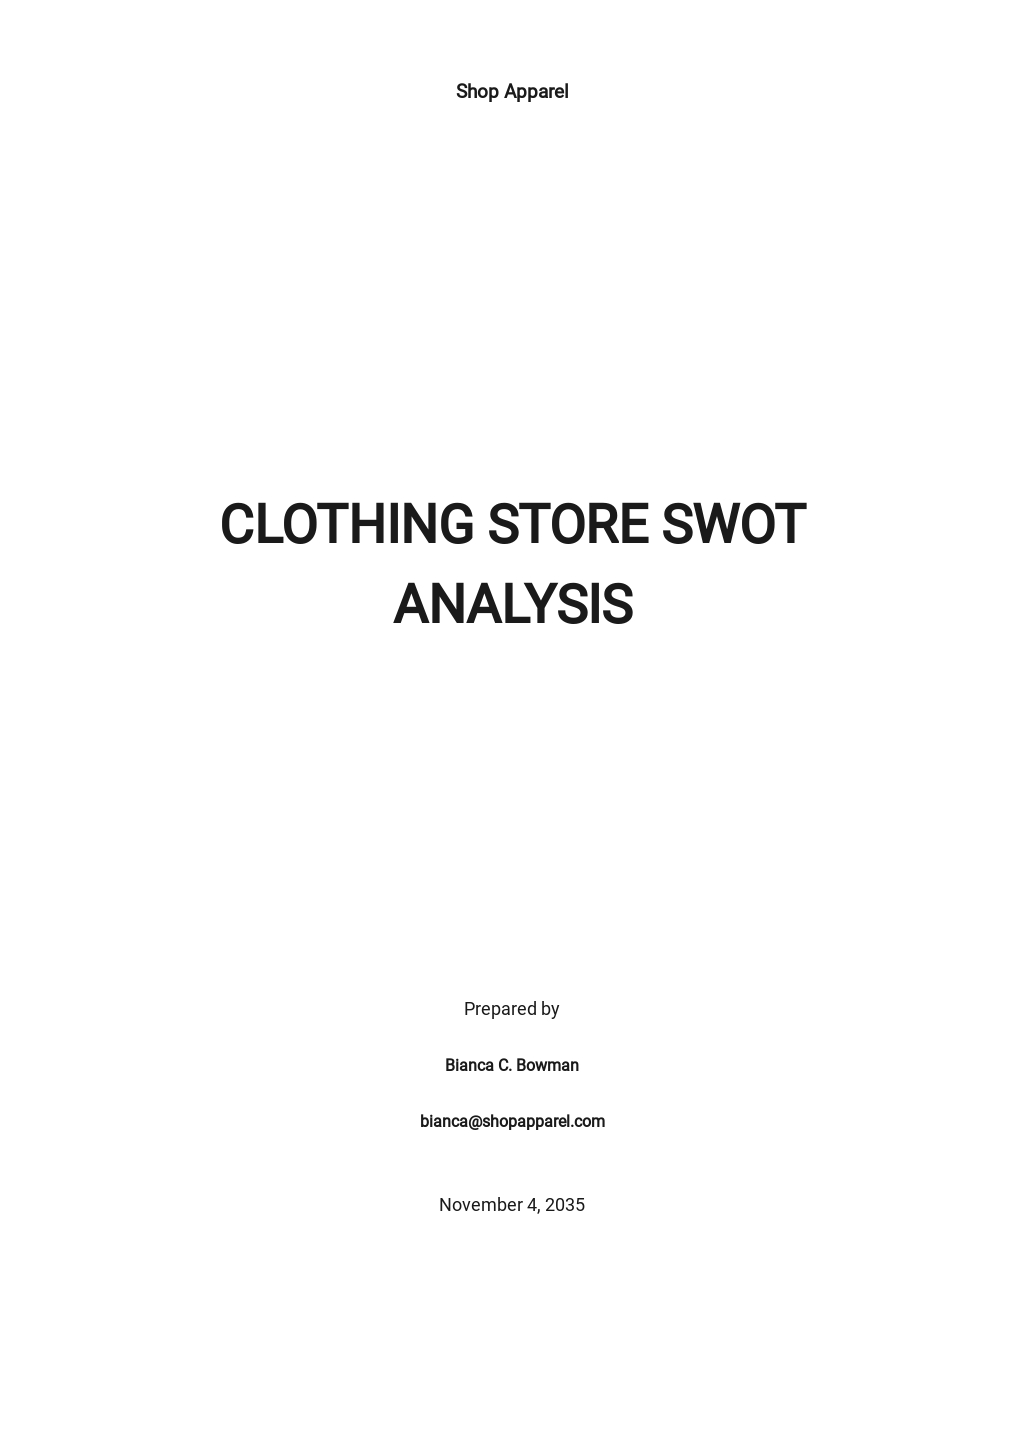 Clothing store swot analysis template.jpe